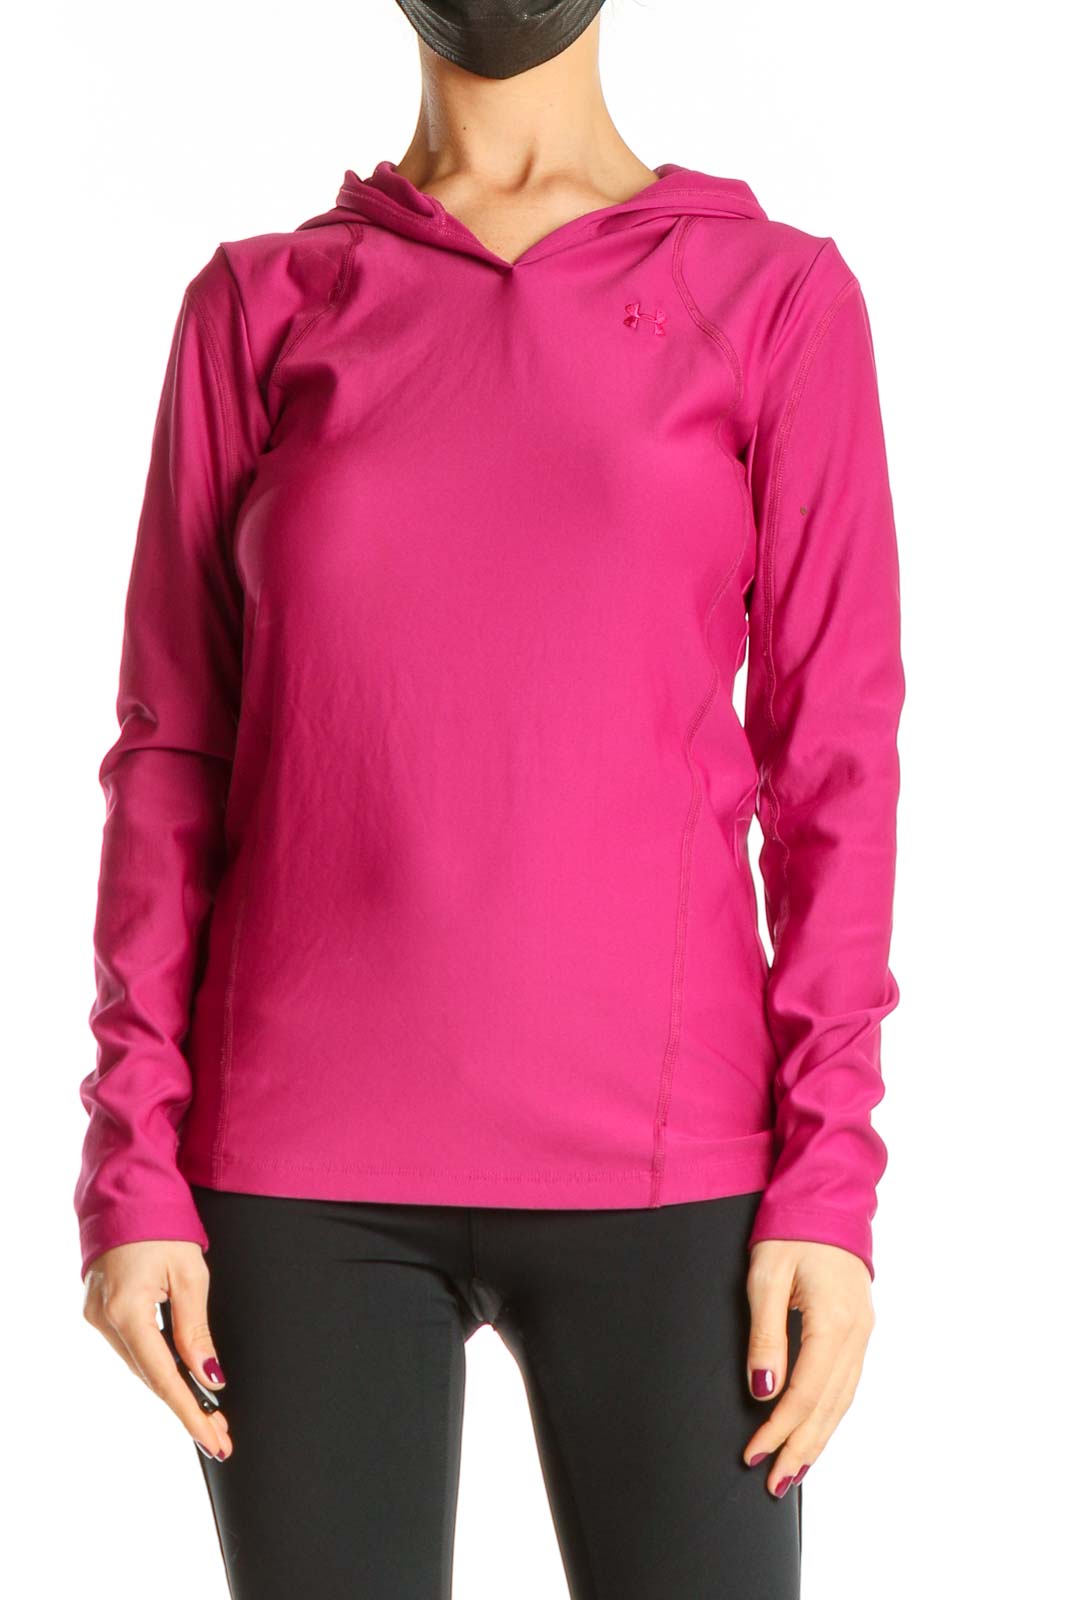 Pink Activewear Jacket Front